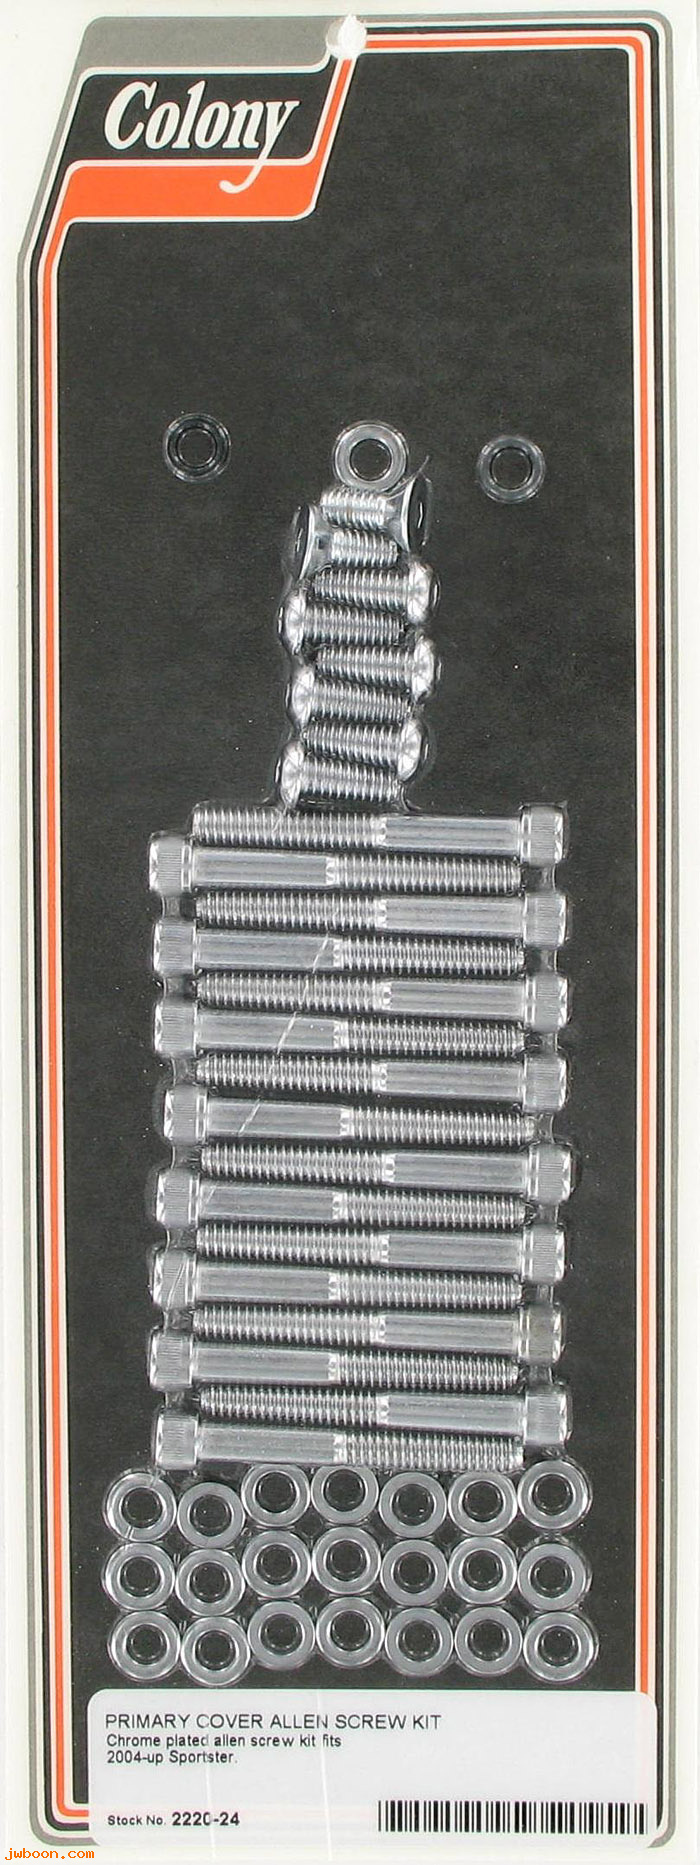 C 2220-24 (): Primary cover screw kit - Allen, in stock - Sportster, XL 2004-